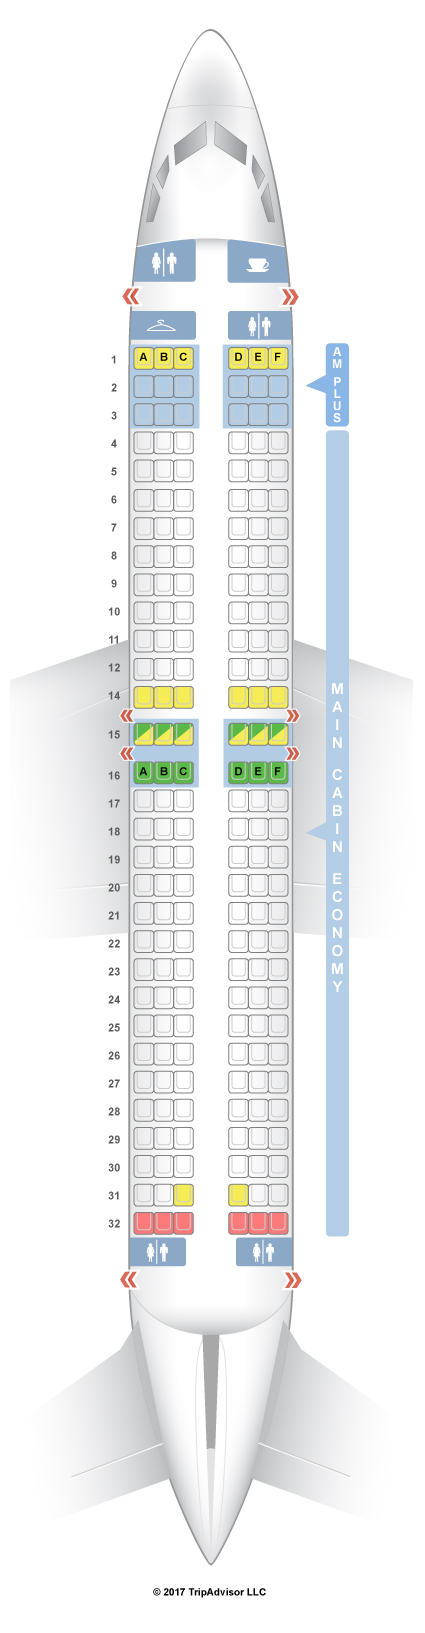 Aeromexico Seating Chart 737